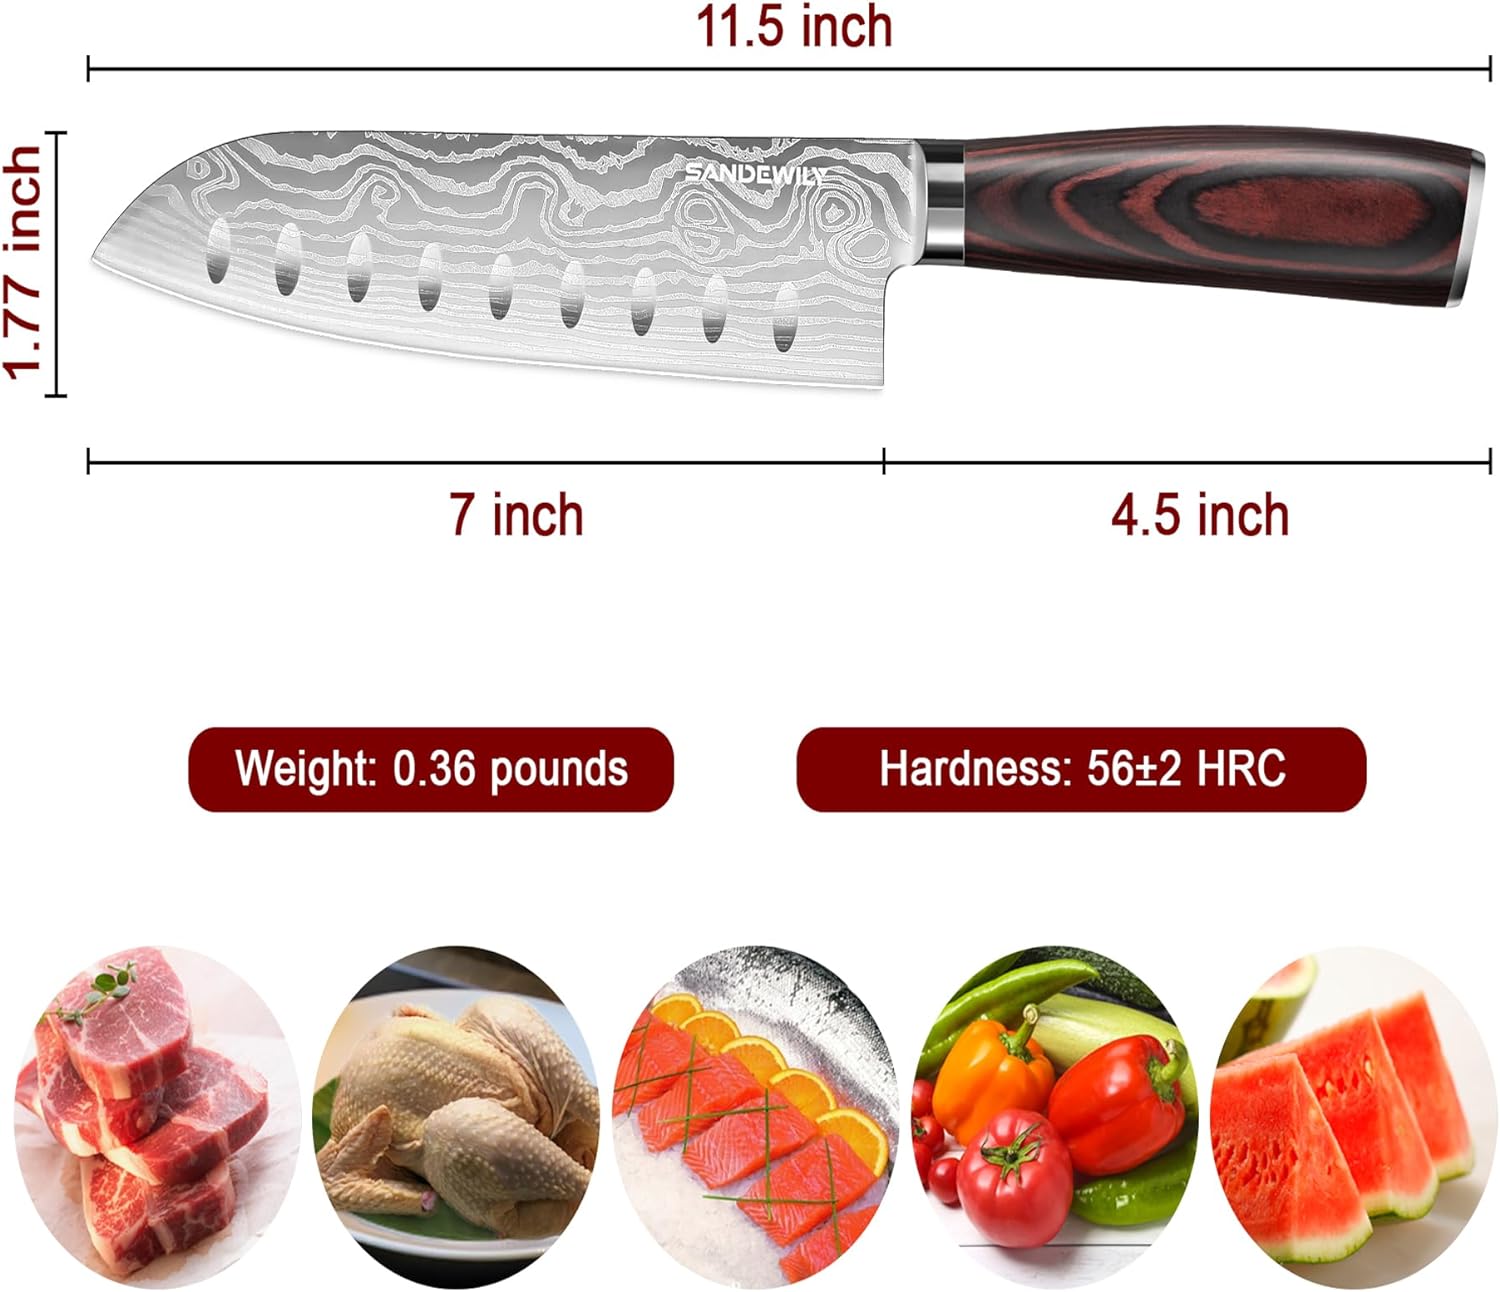 KD 7" Japanese Santoku Knife - Ultra Sharp Kitchen Chef Knife with Sheath & Gift Box